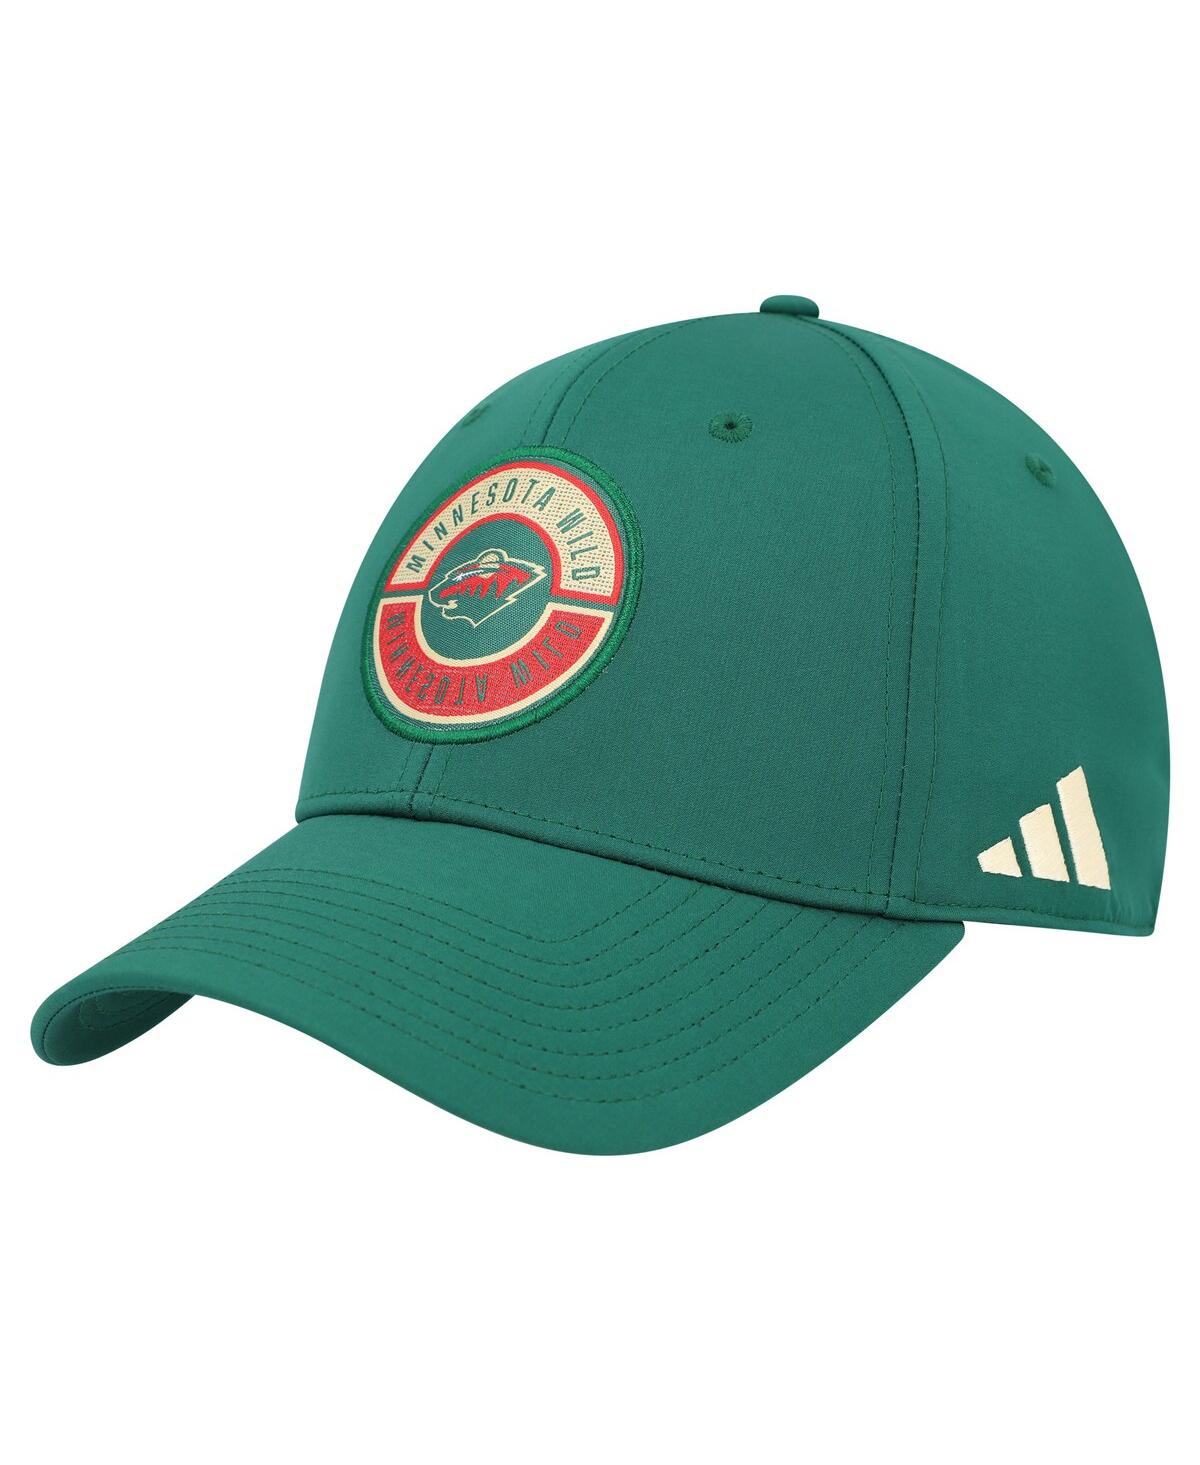 Shop Adidas Originals Men's Adidas Green Minnesota Wild Circle Logo Flex Hat